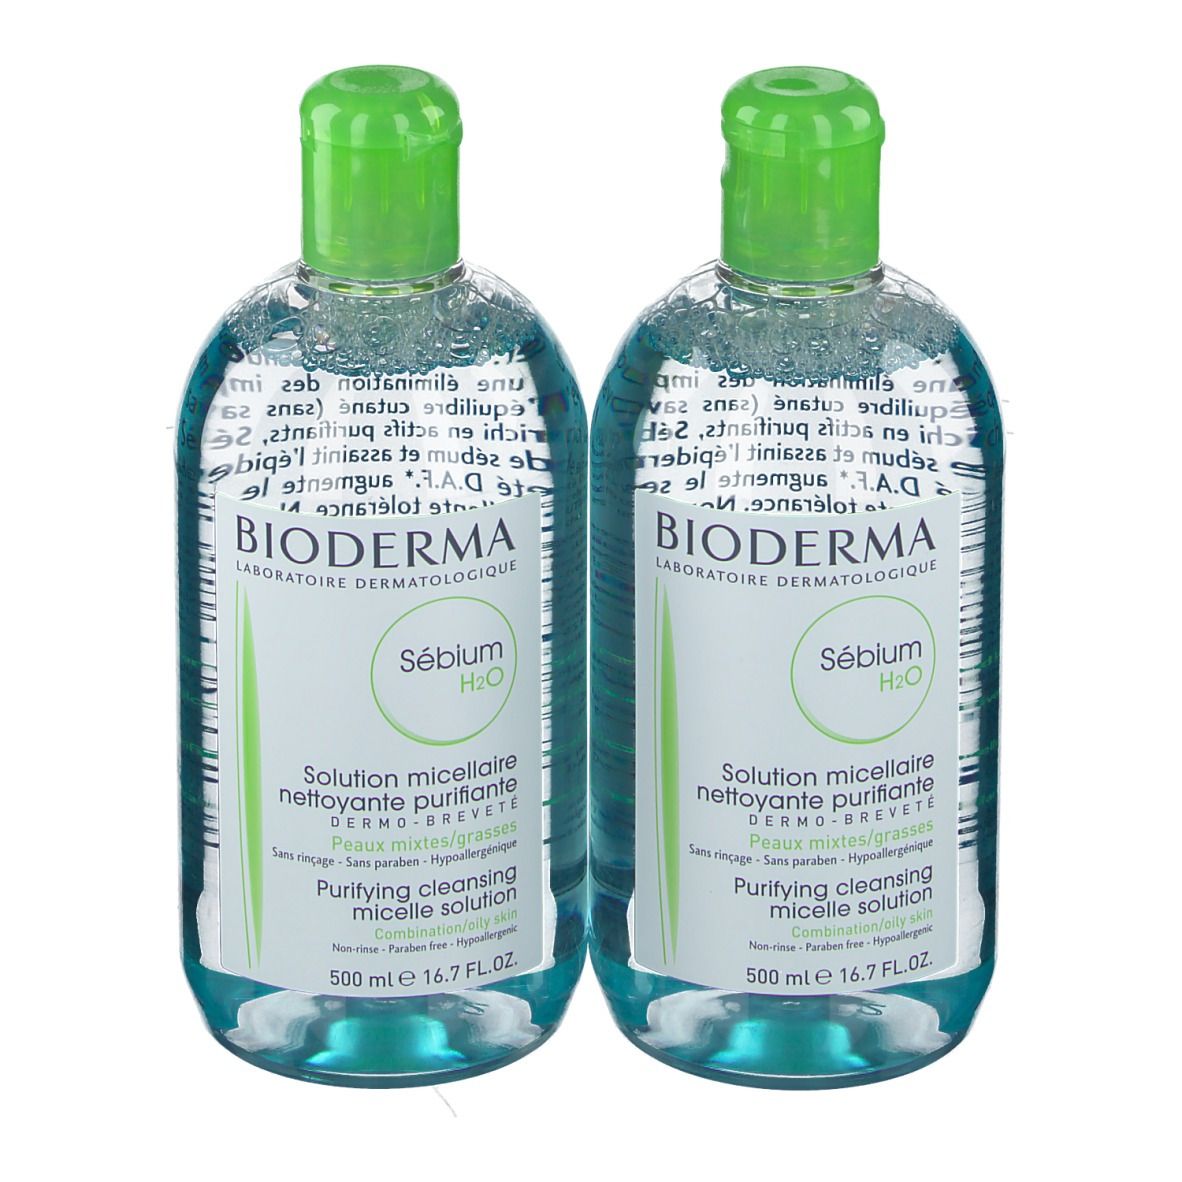 Bioderma Sébium H2O solution micellaire